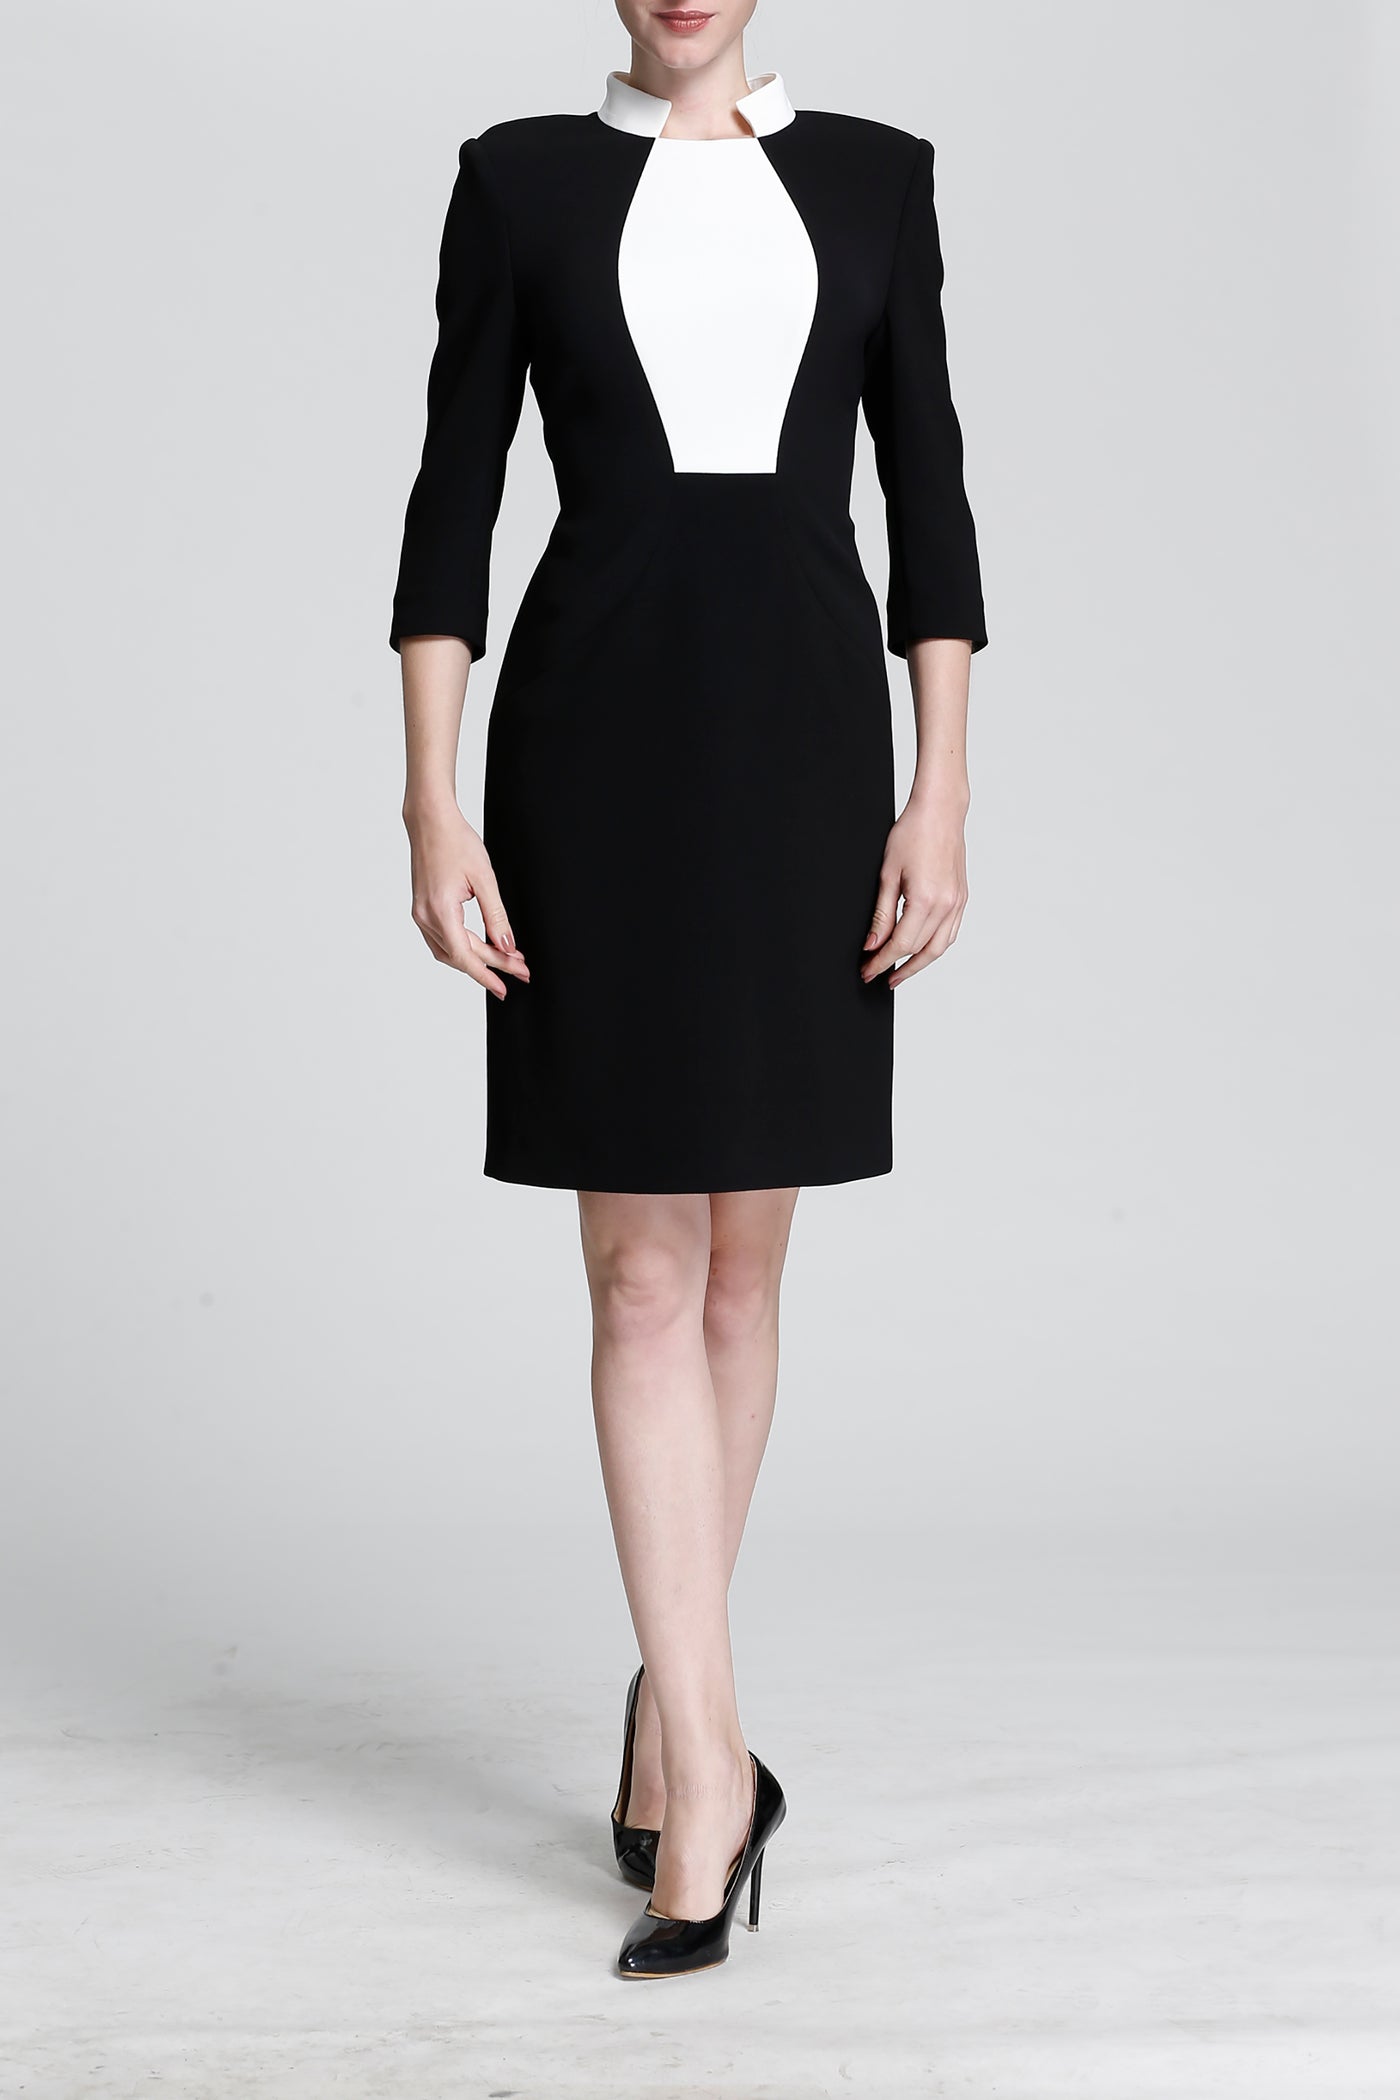 DL Black & White Stand-Up Collar Dress